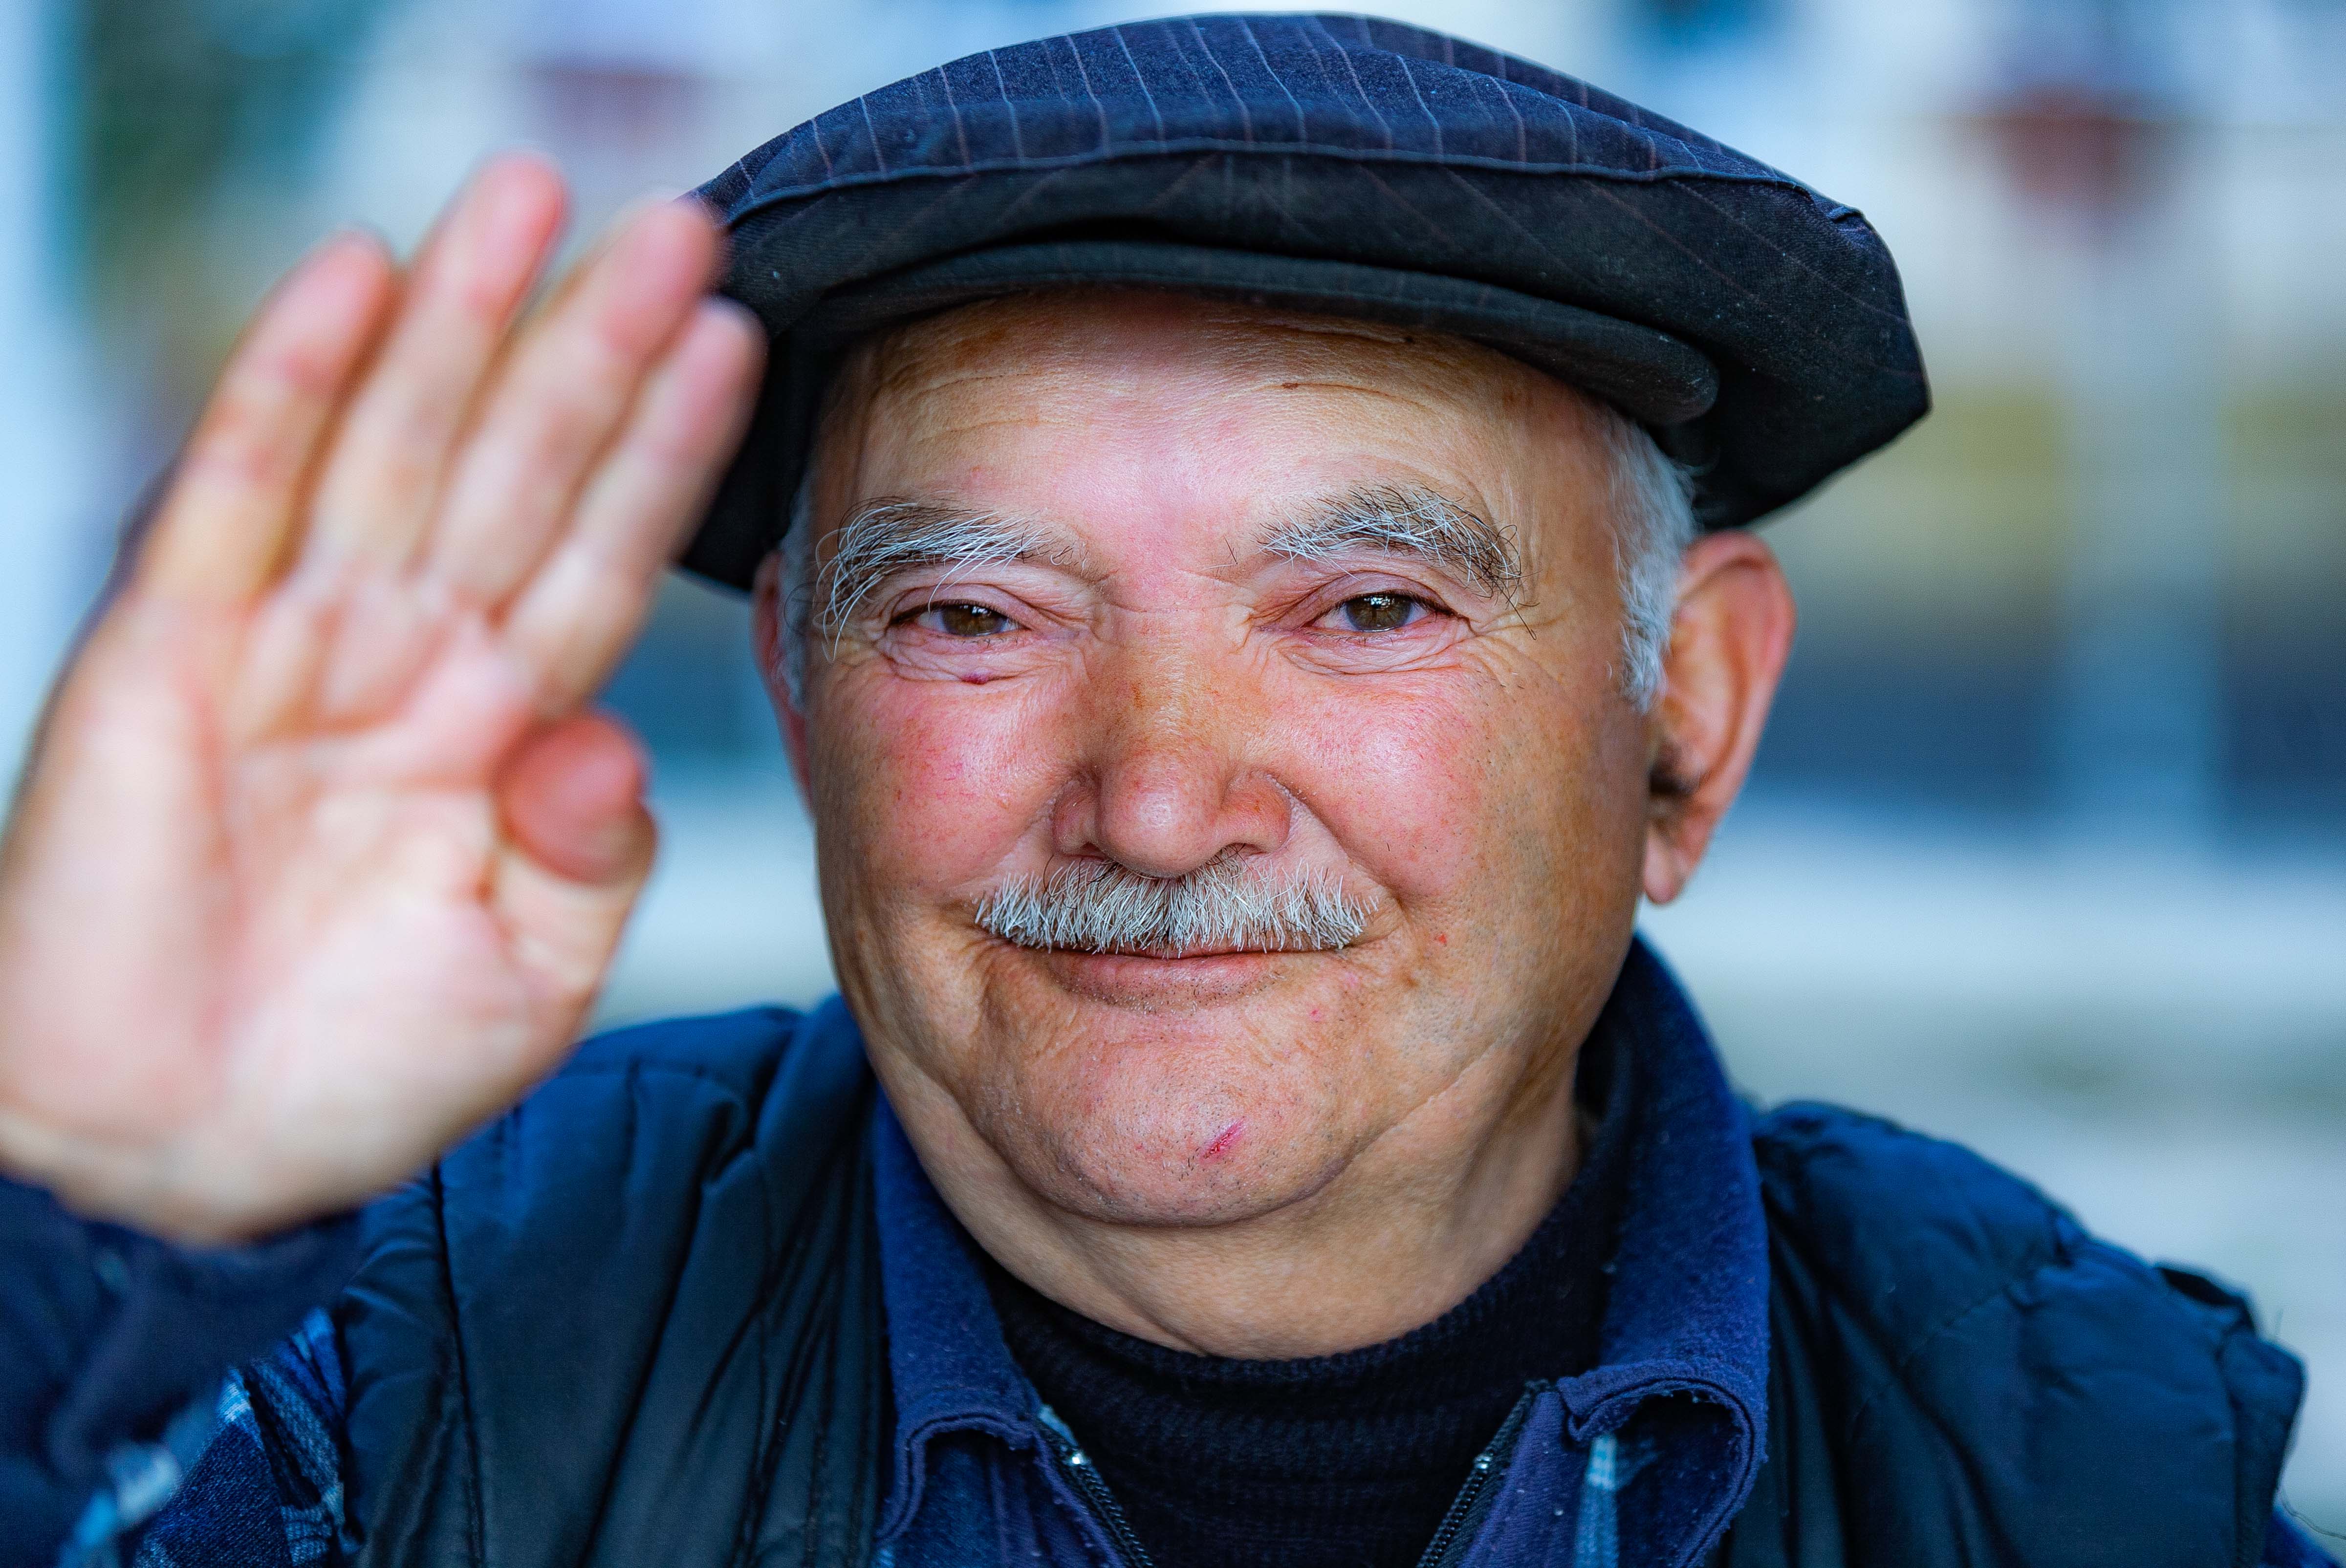 Azerbaijan, Agstafa Prov, Man With Hat, 2009, IMG 8672